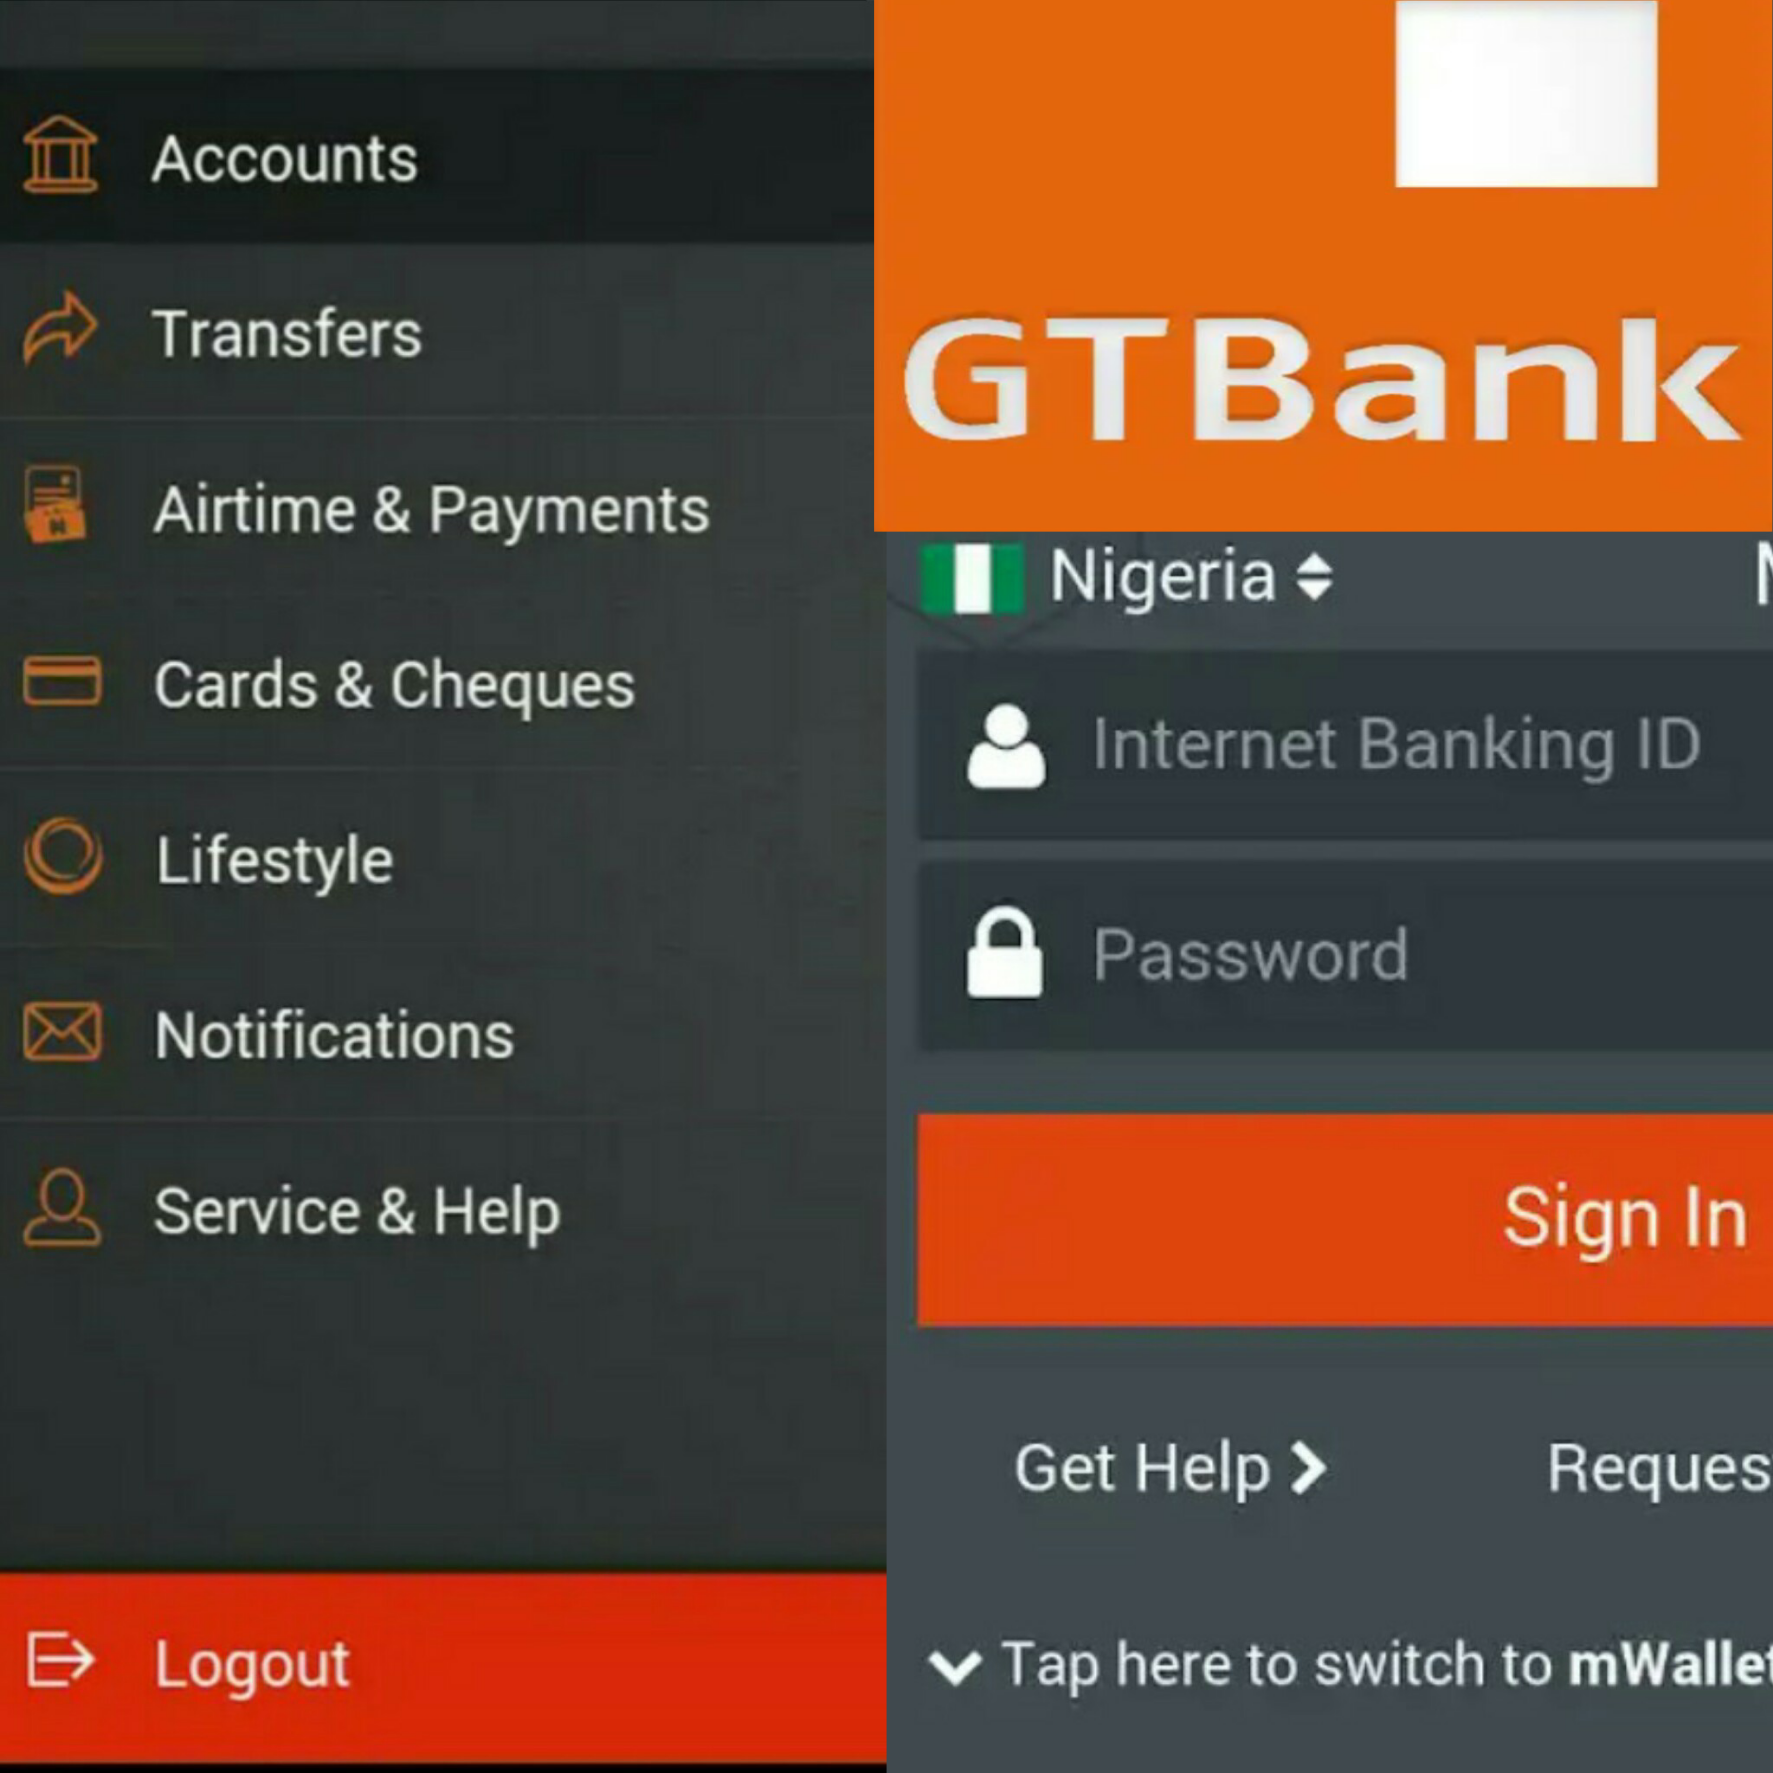 Download GTBank Mobile App For Faster, Safer, Easier Internet Banking On Mobile Phone